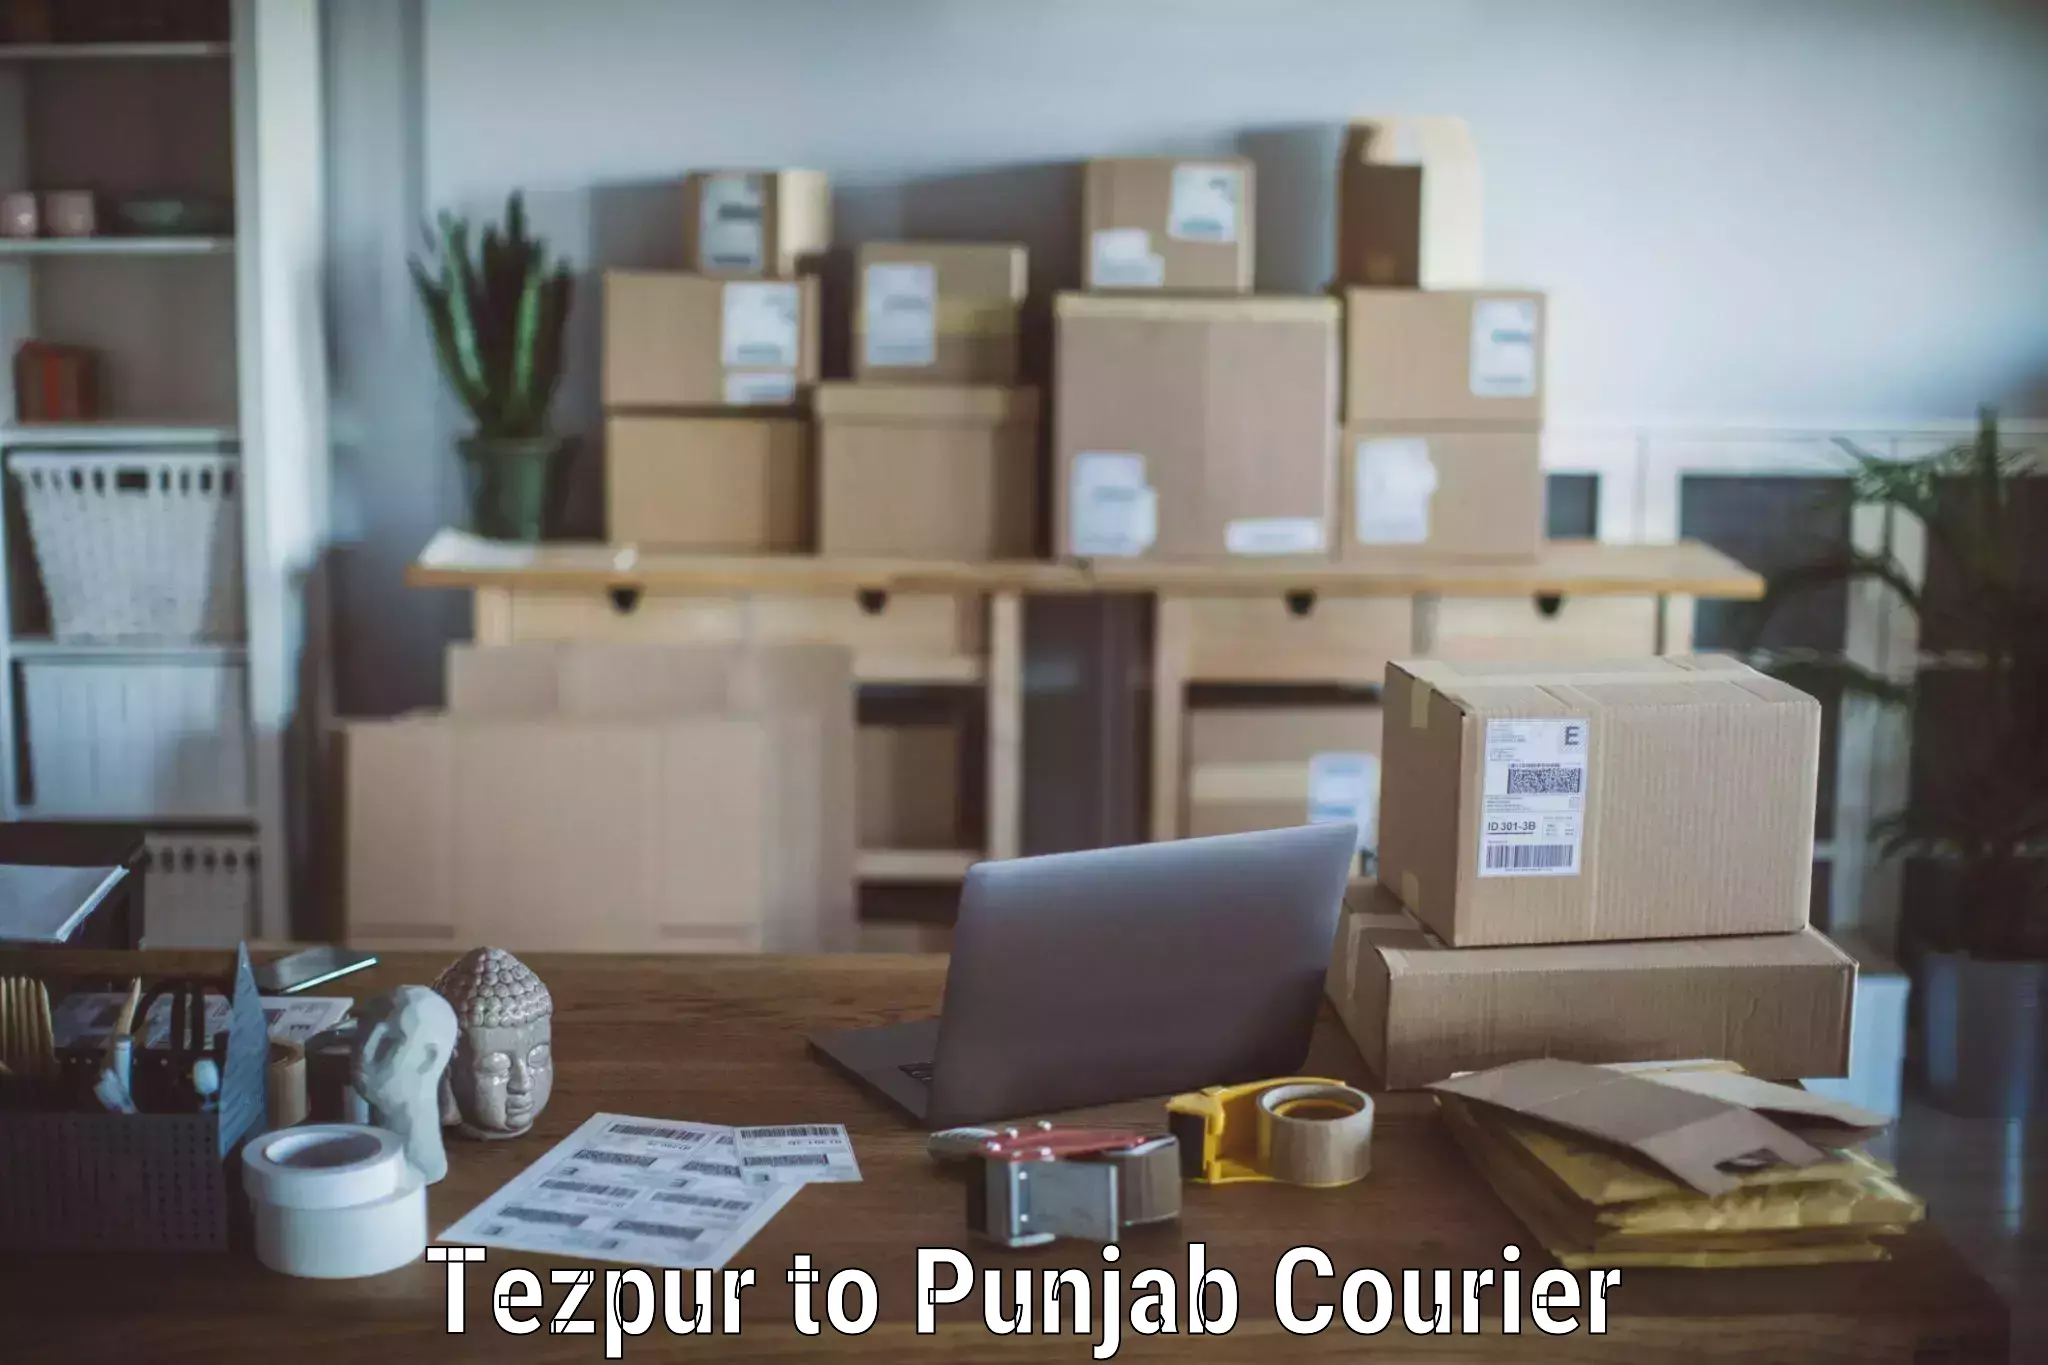 Professional moving company Tezpur to Punjab